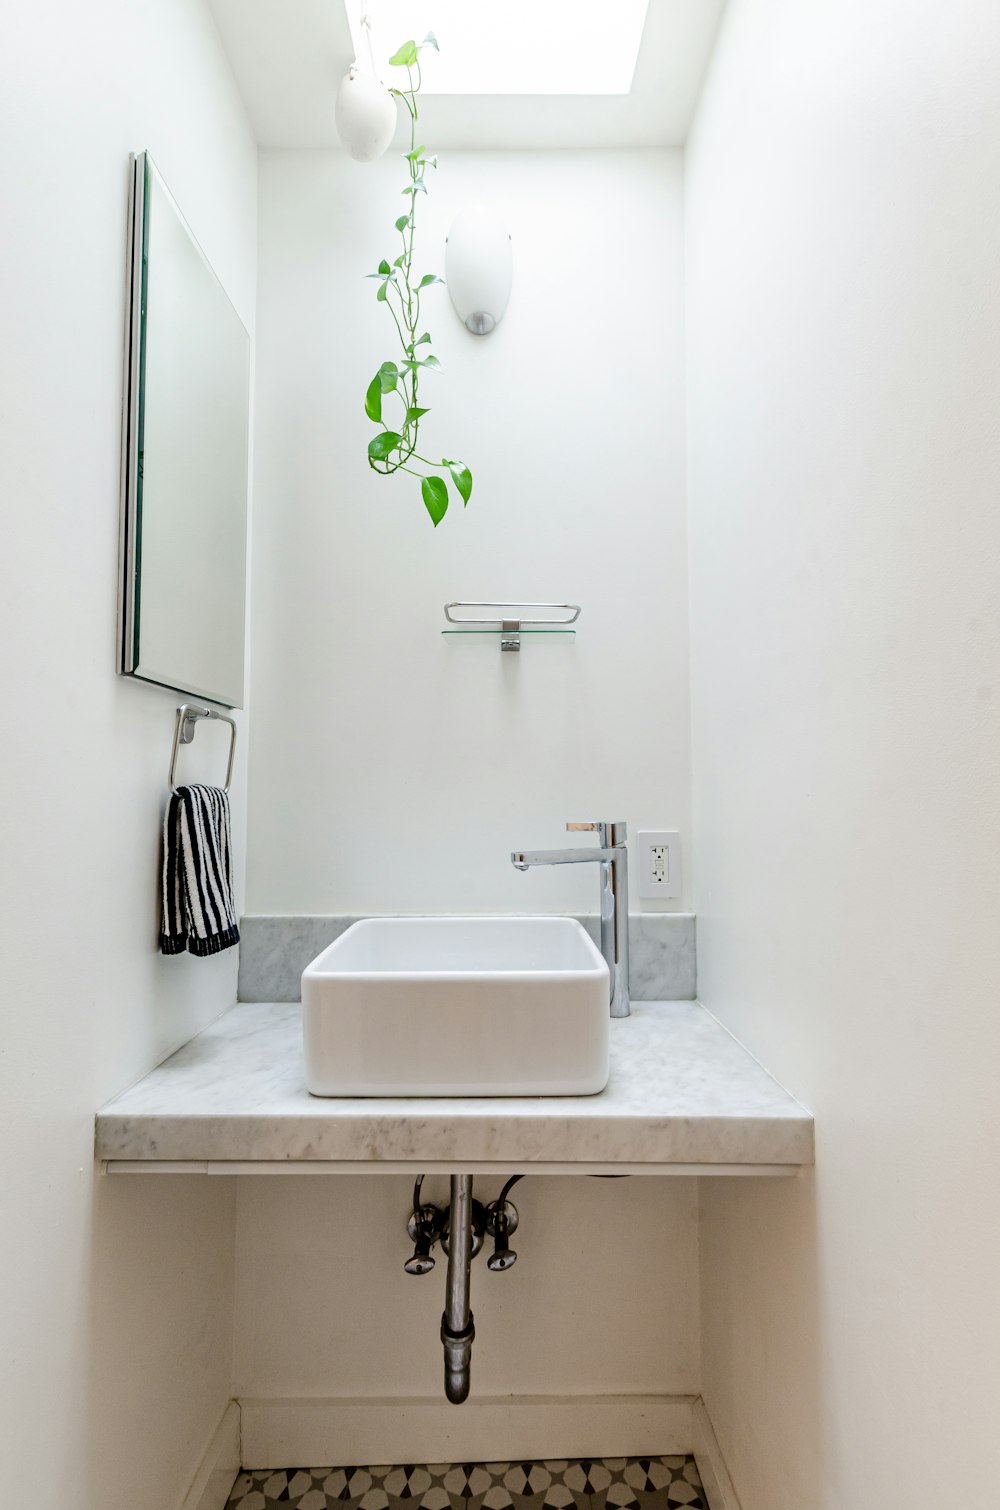 Bathroom Sink Pictures Download Free Images On Unsplash